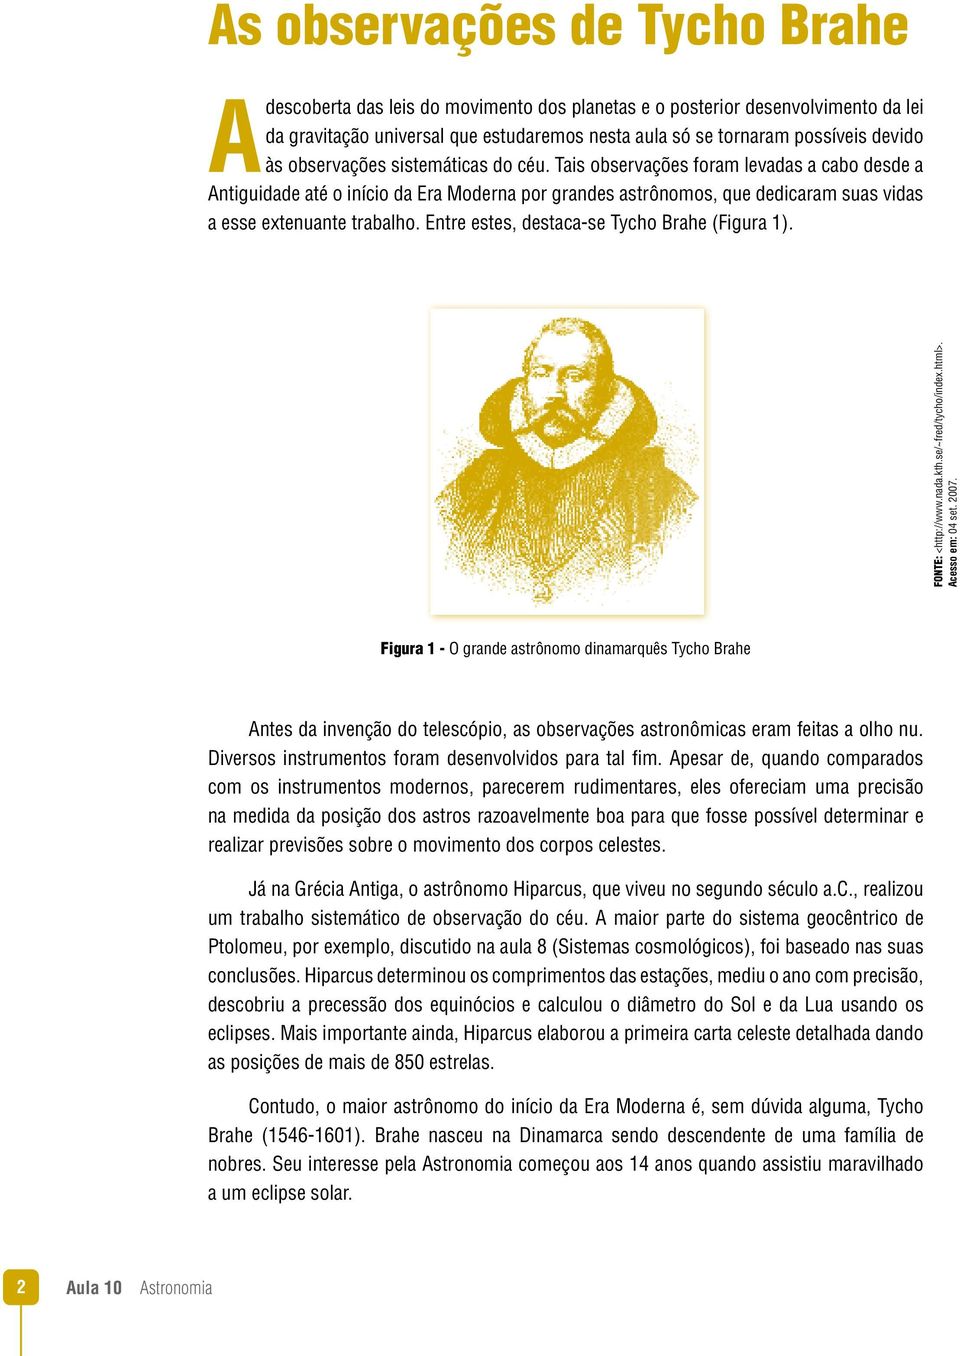 Entre estes, destaca-se Tycho Brahe (Figura 1). FONTE: <http://www.nada.kth.se/~fred/tycho/index.html>. Acesso em: 04 set. 2007.